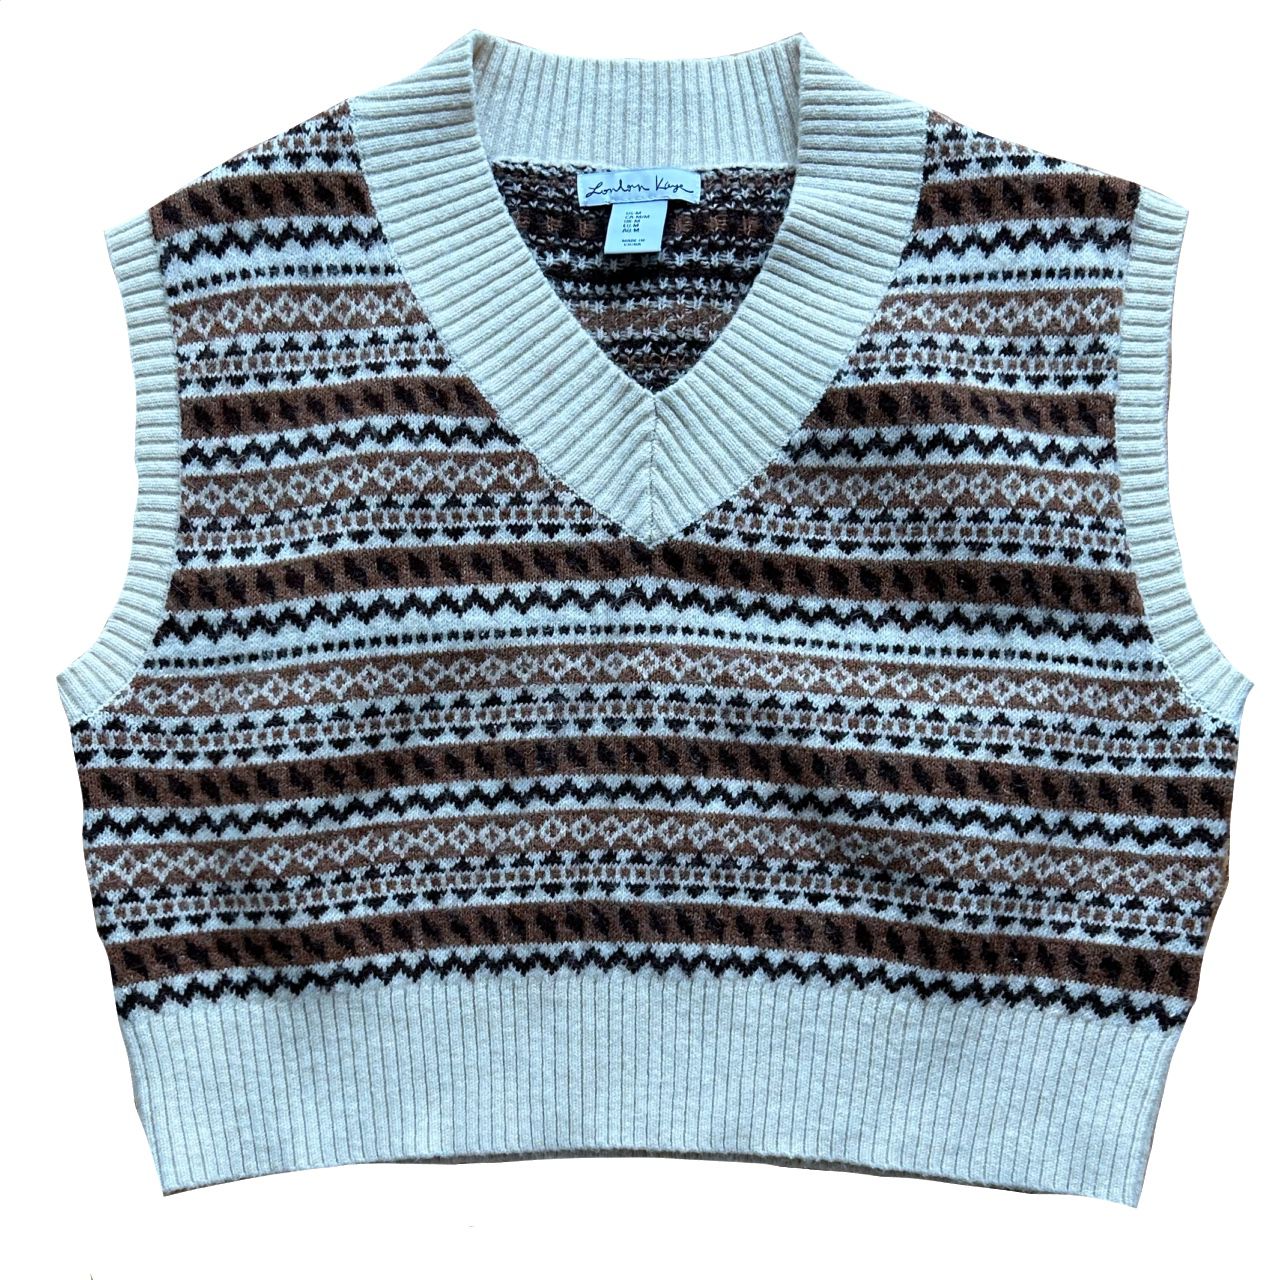 London Kaye sweater vest